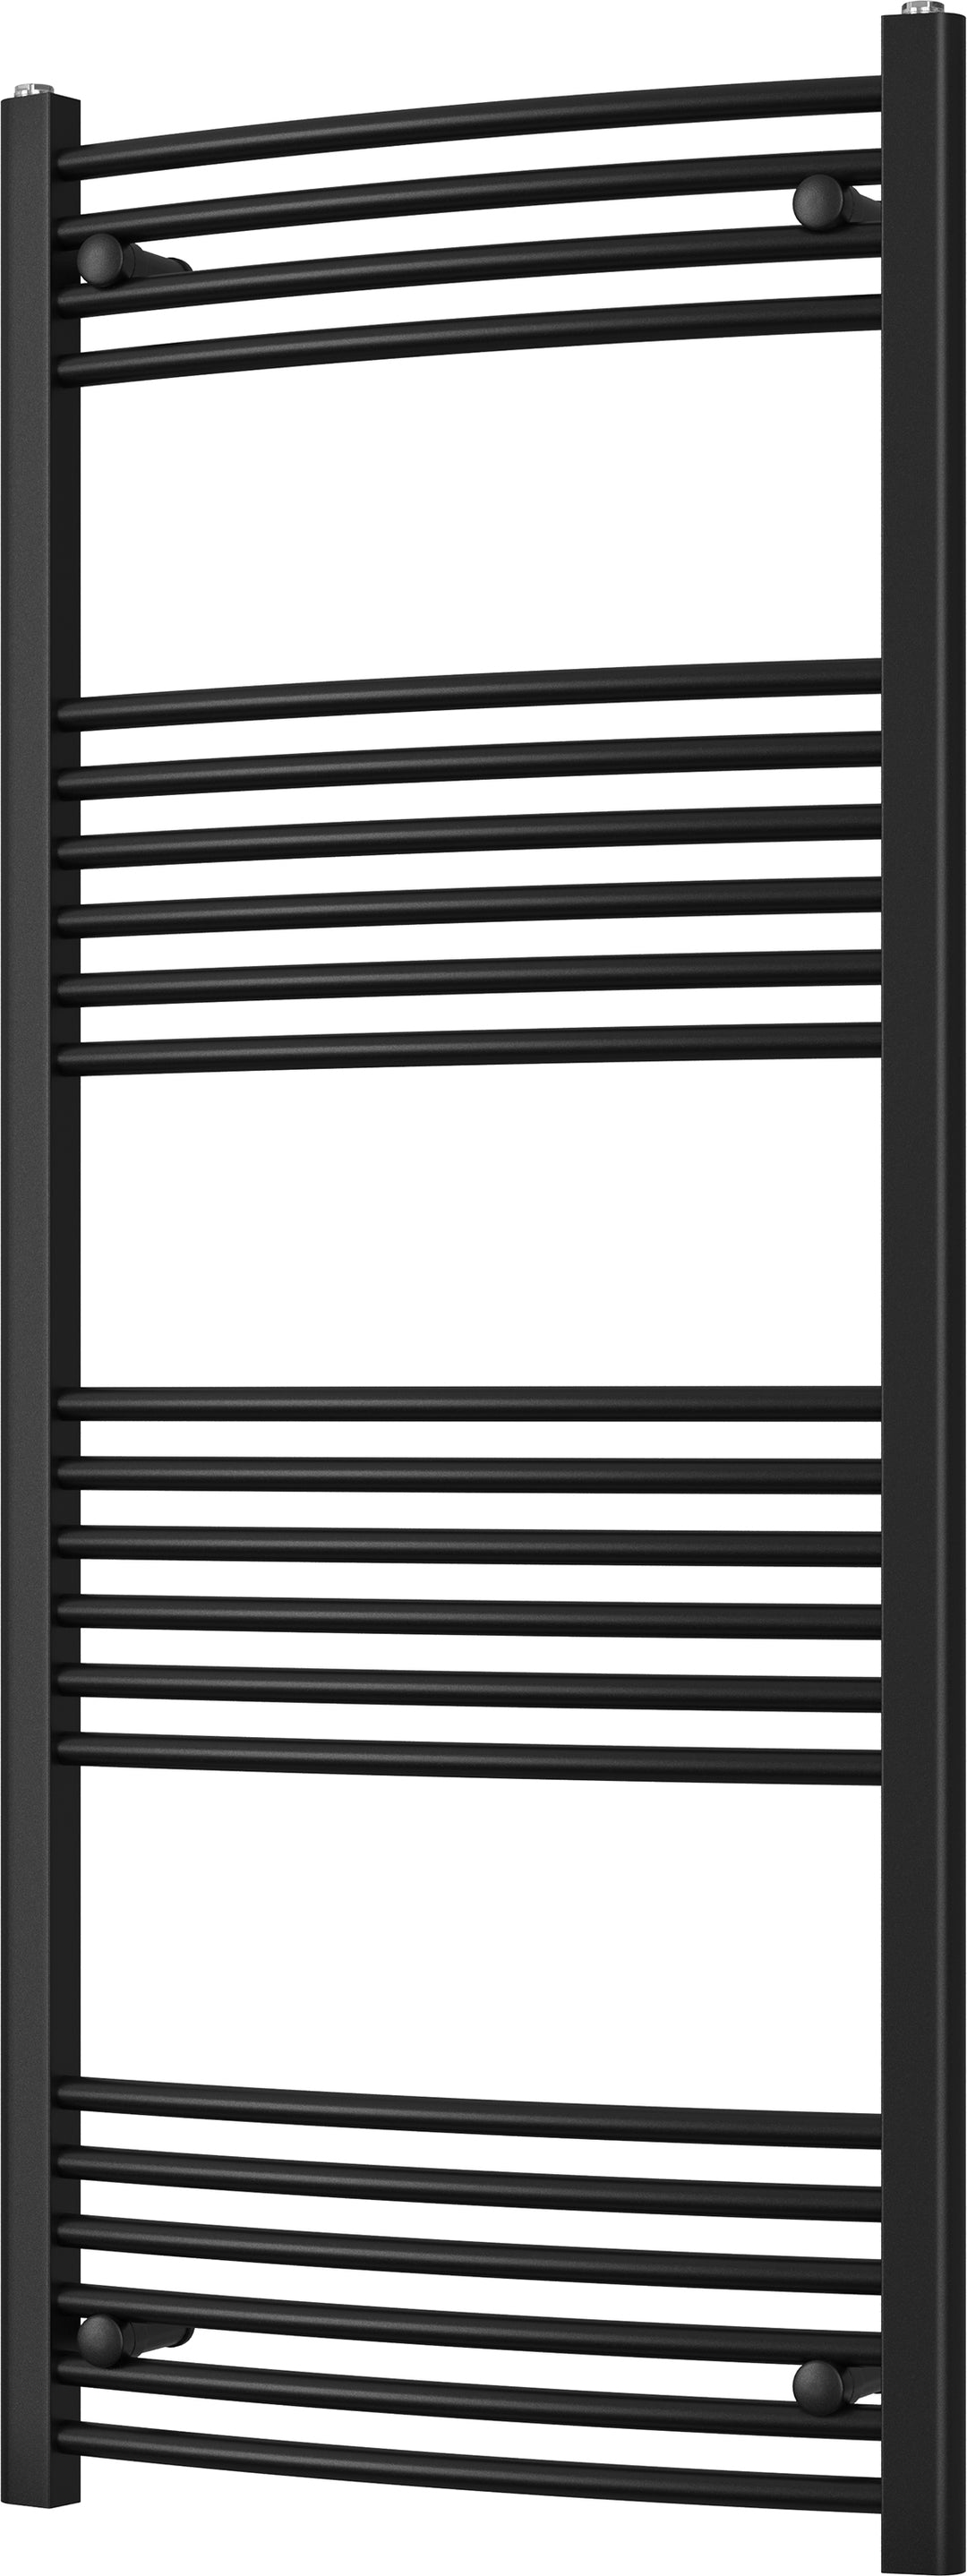 Zennor - Black Heated Towel Rail - H1400mm x W600mm - Curved